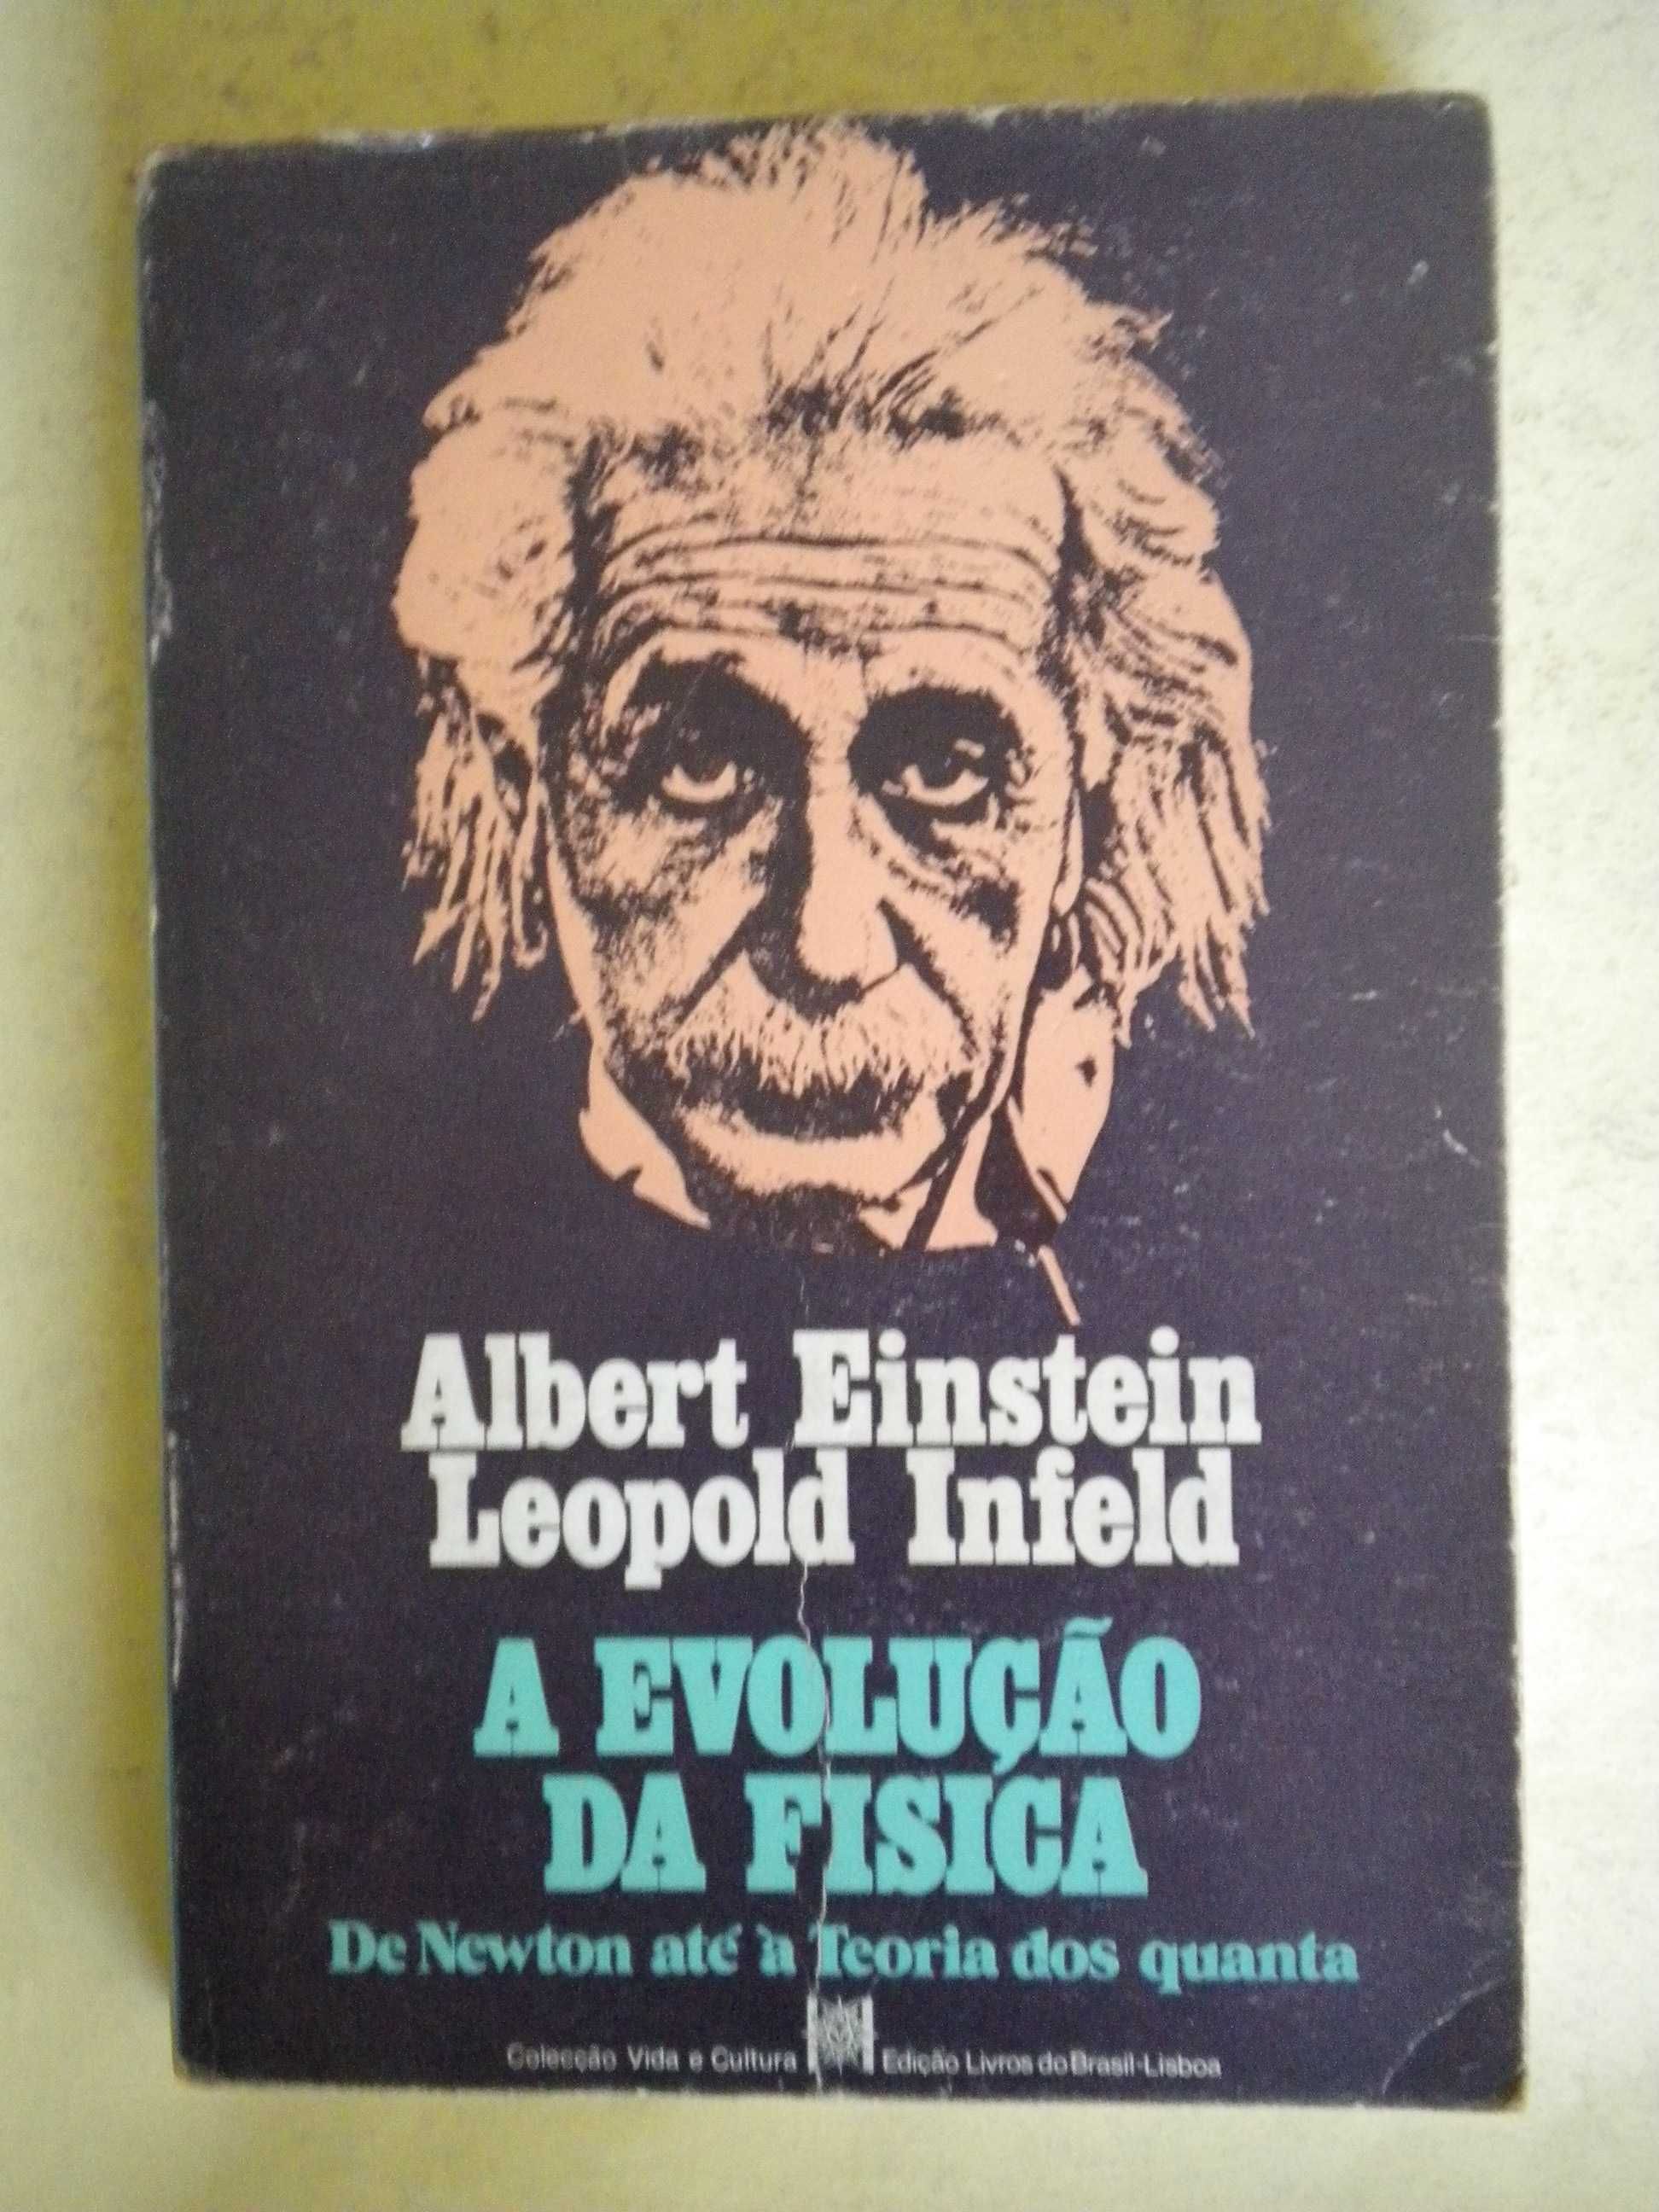 A Evolução da Física
de Albert Einsten e Leopold Infeld